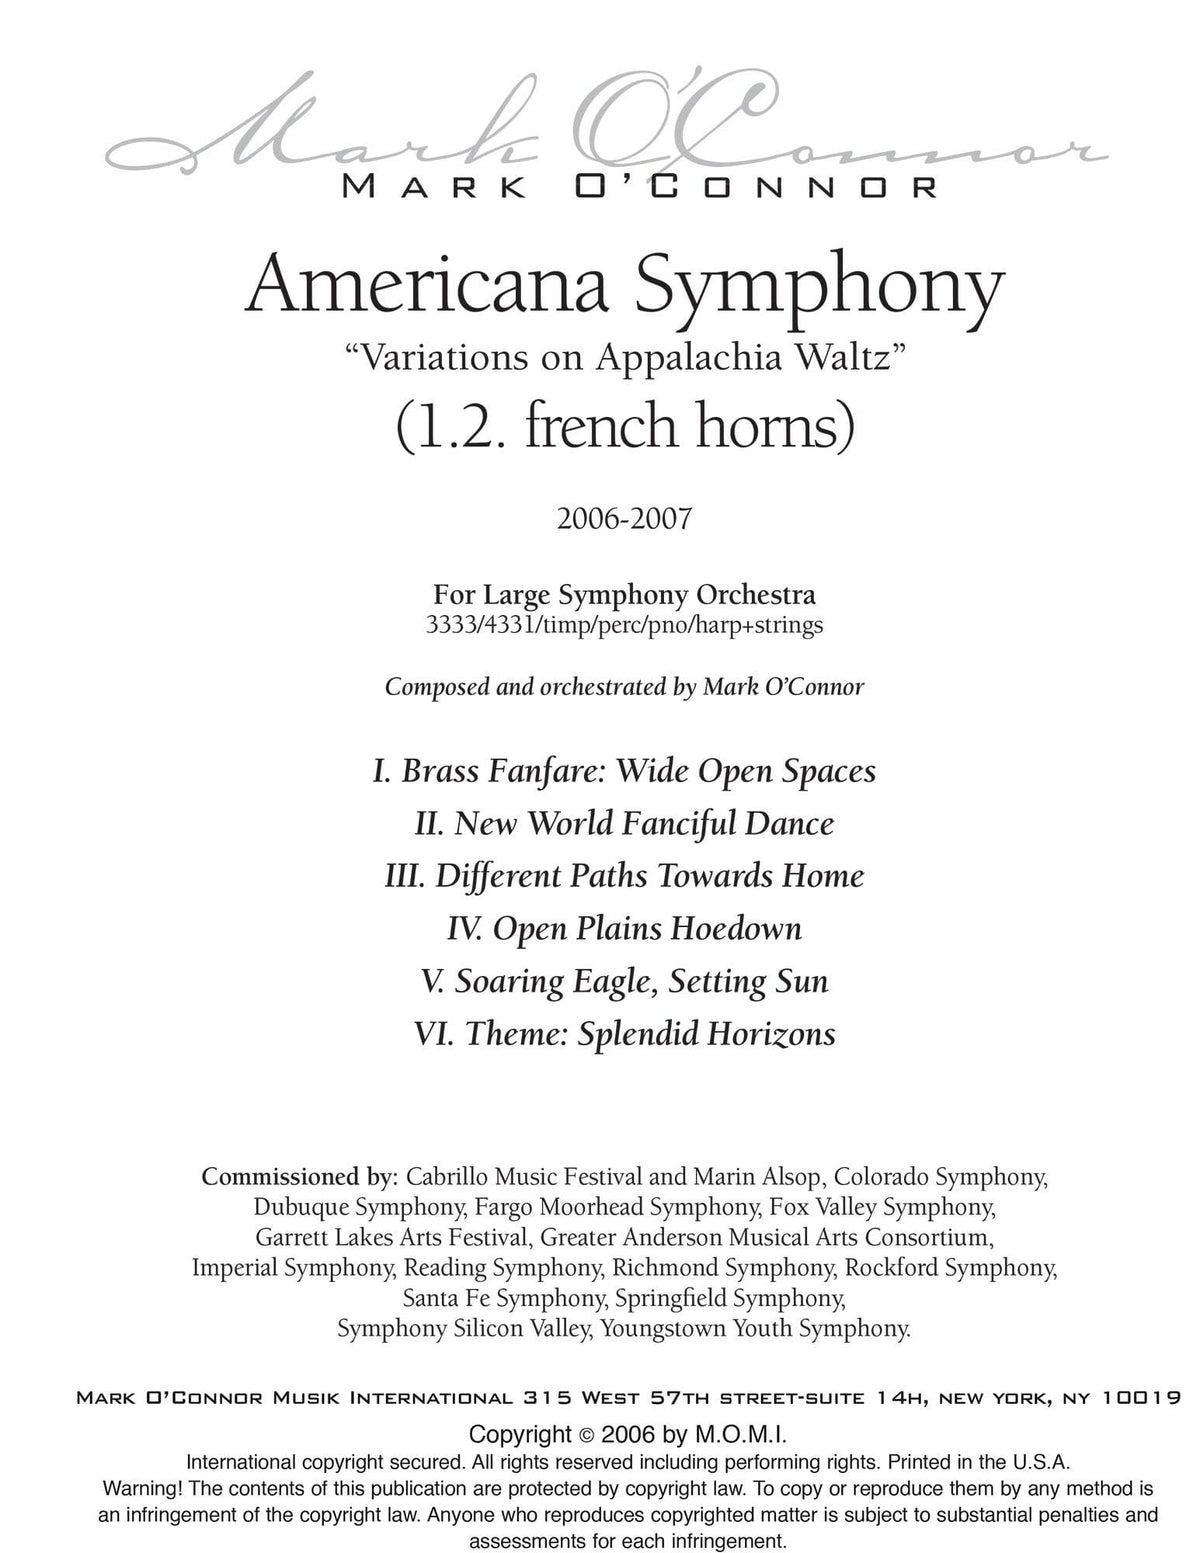 O'Connor, Mark - Americana Symphony "Variations on Appalachia Waltz" - Brass Parts - Digital Download